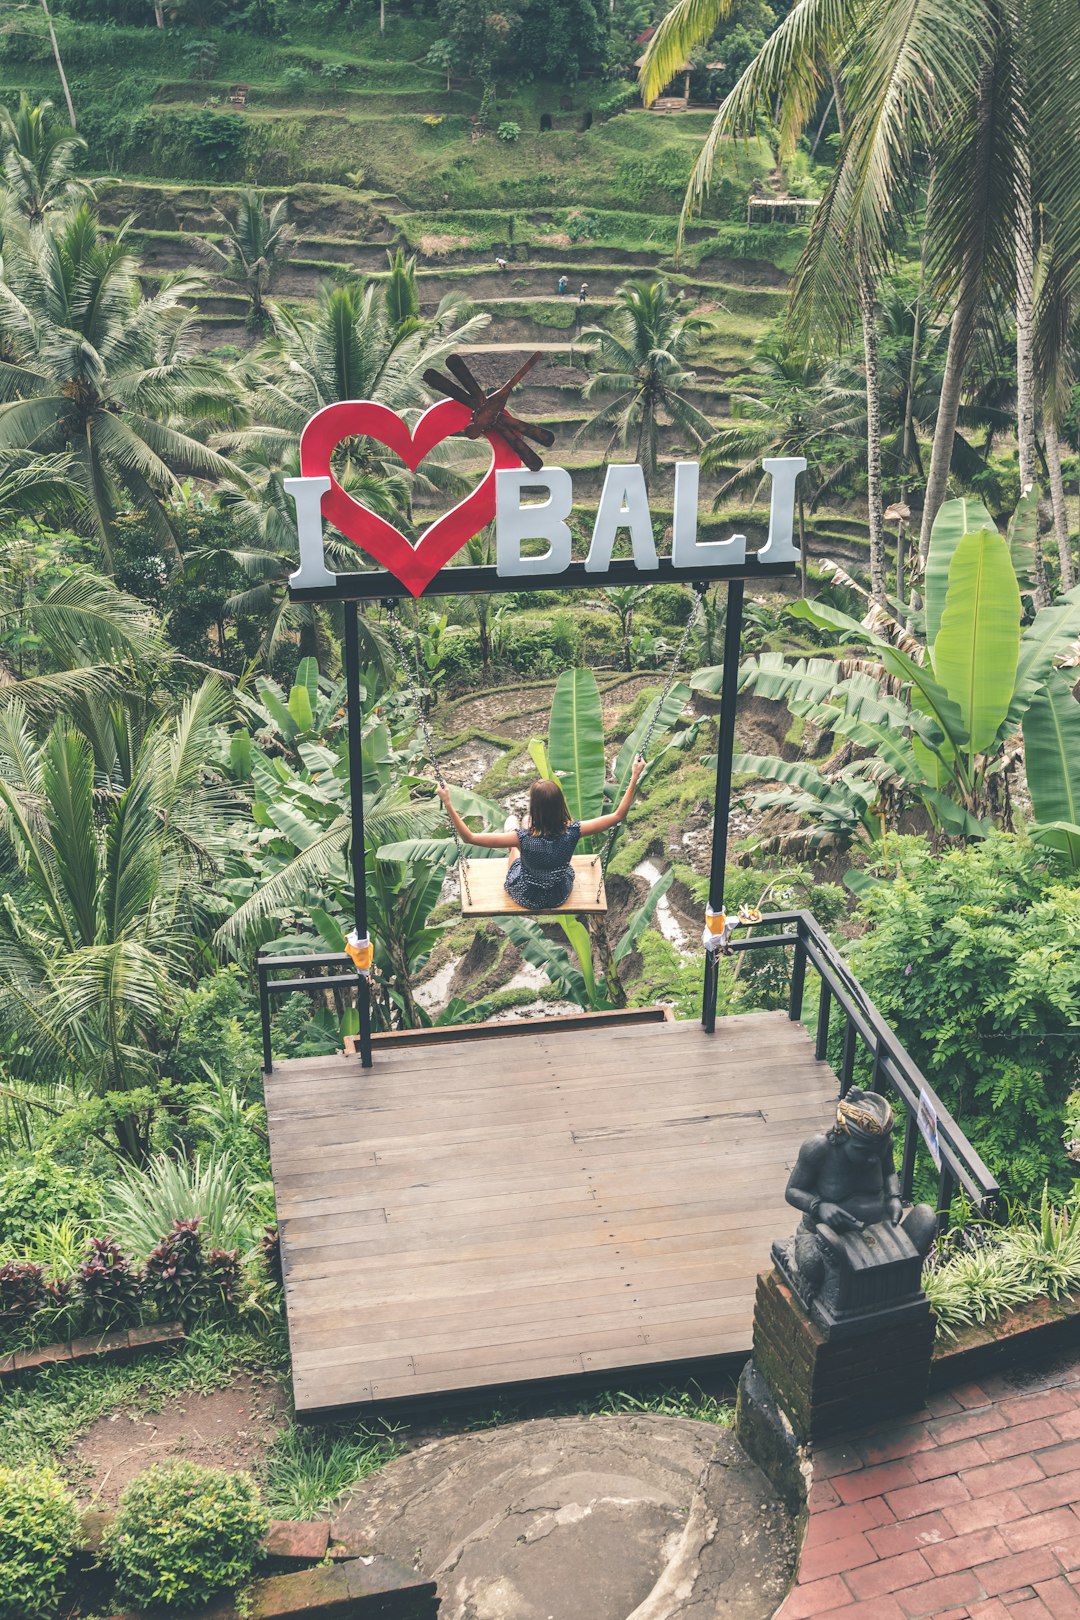 Rainforest photo spot Bali Badung